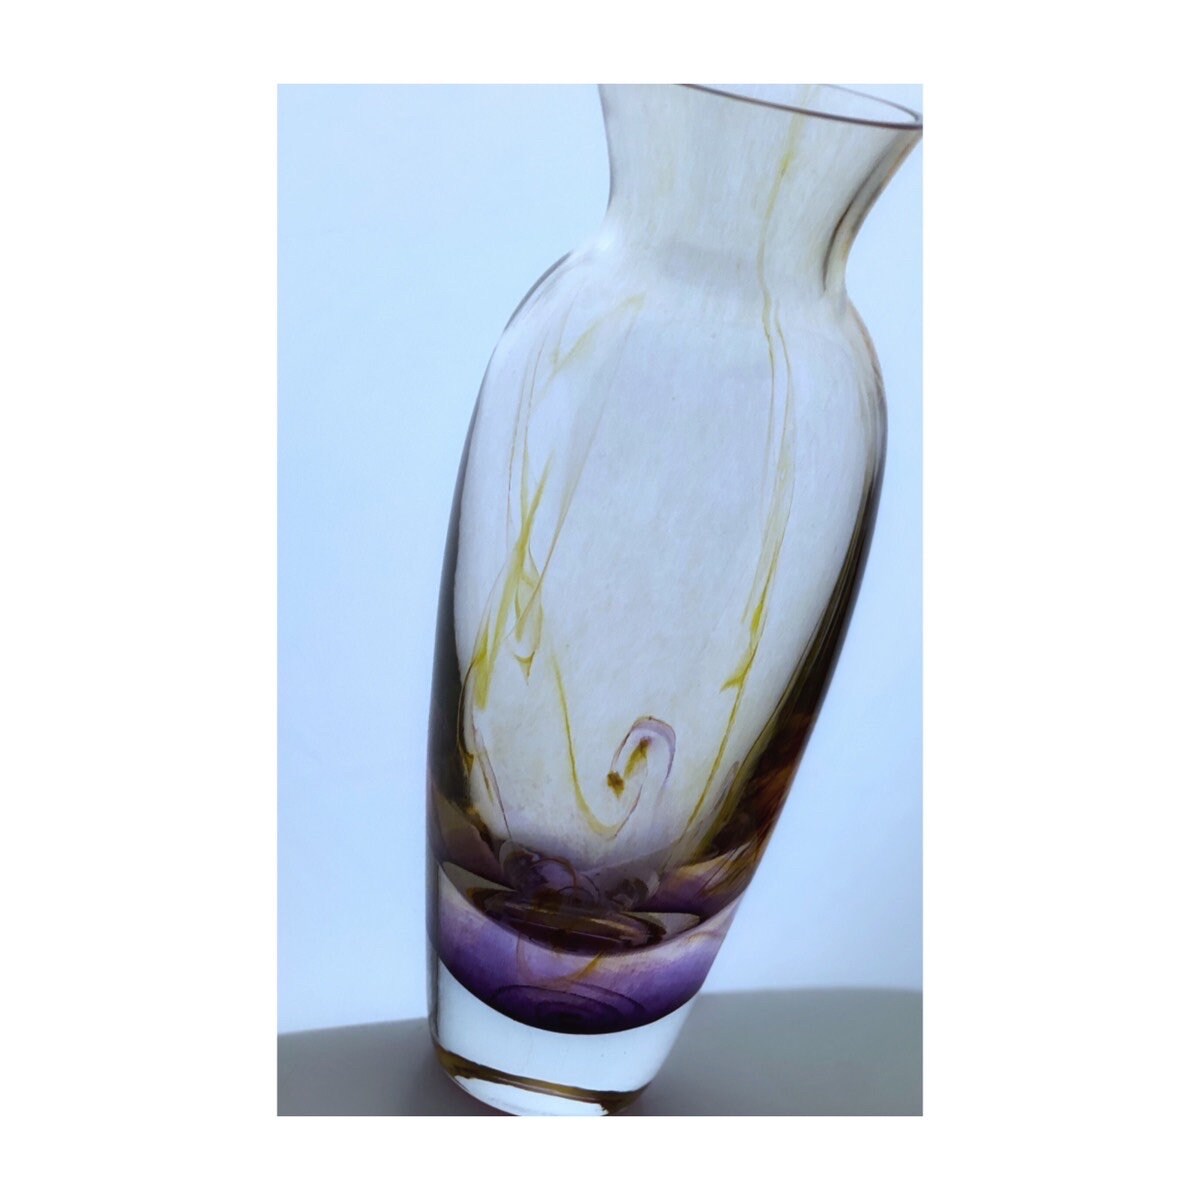 Caithness Glass, Scotland  'Tempest' Range from 1998 Scandinavian Style Very Rare